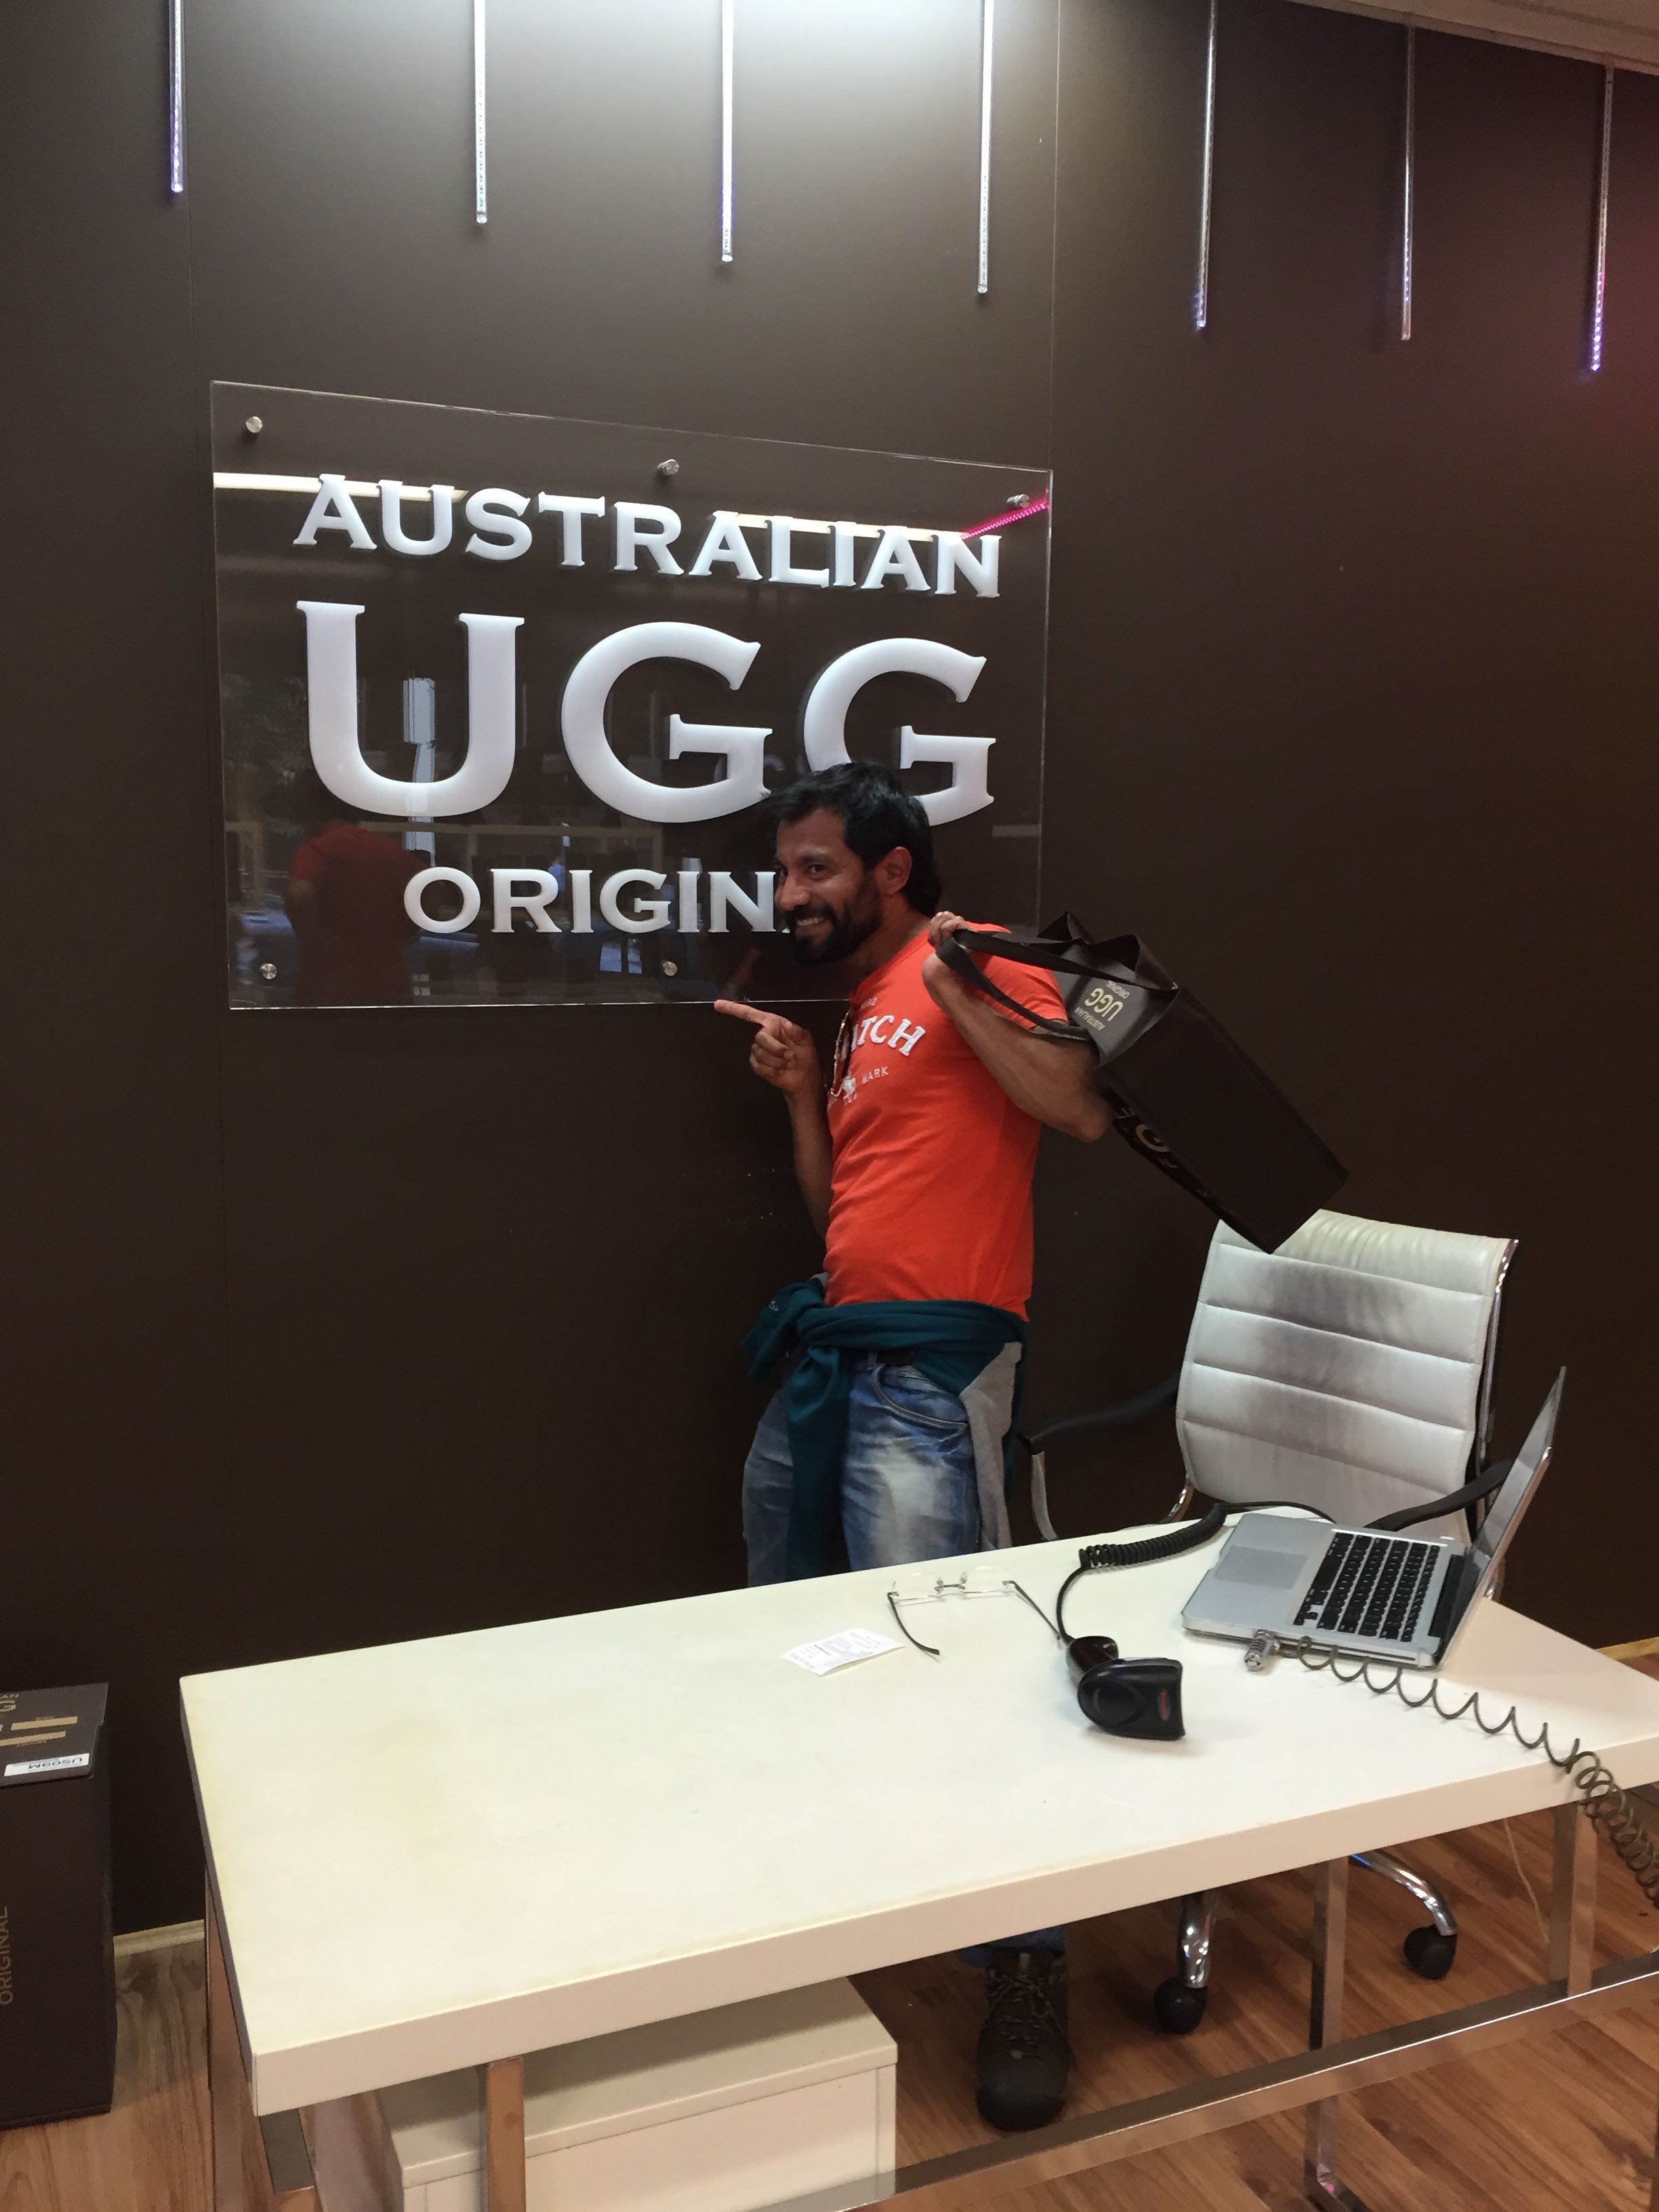 Ugg boots &quot;Australian Ugg Original&quot; made in Australia | Sydney UGG Store